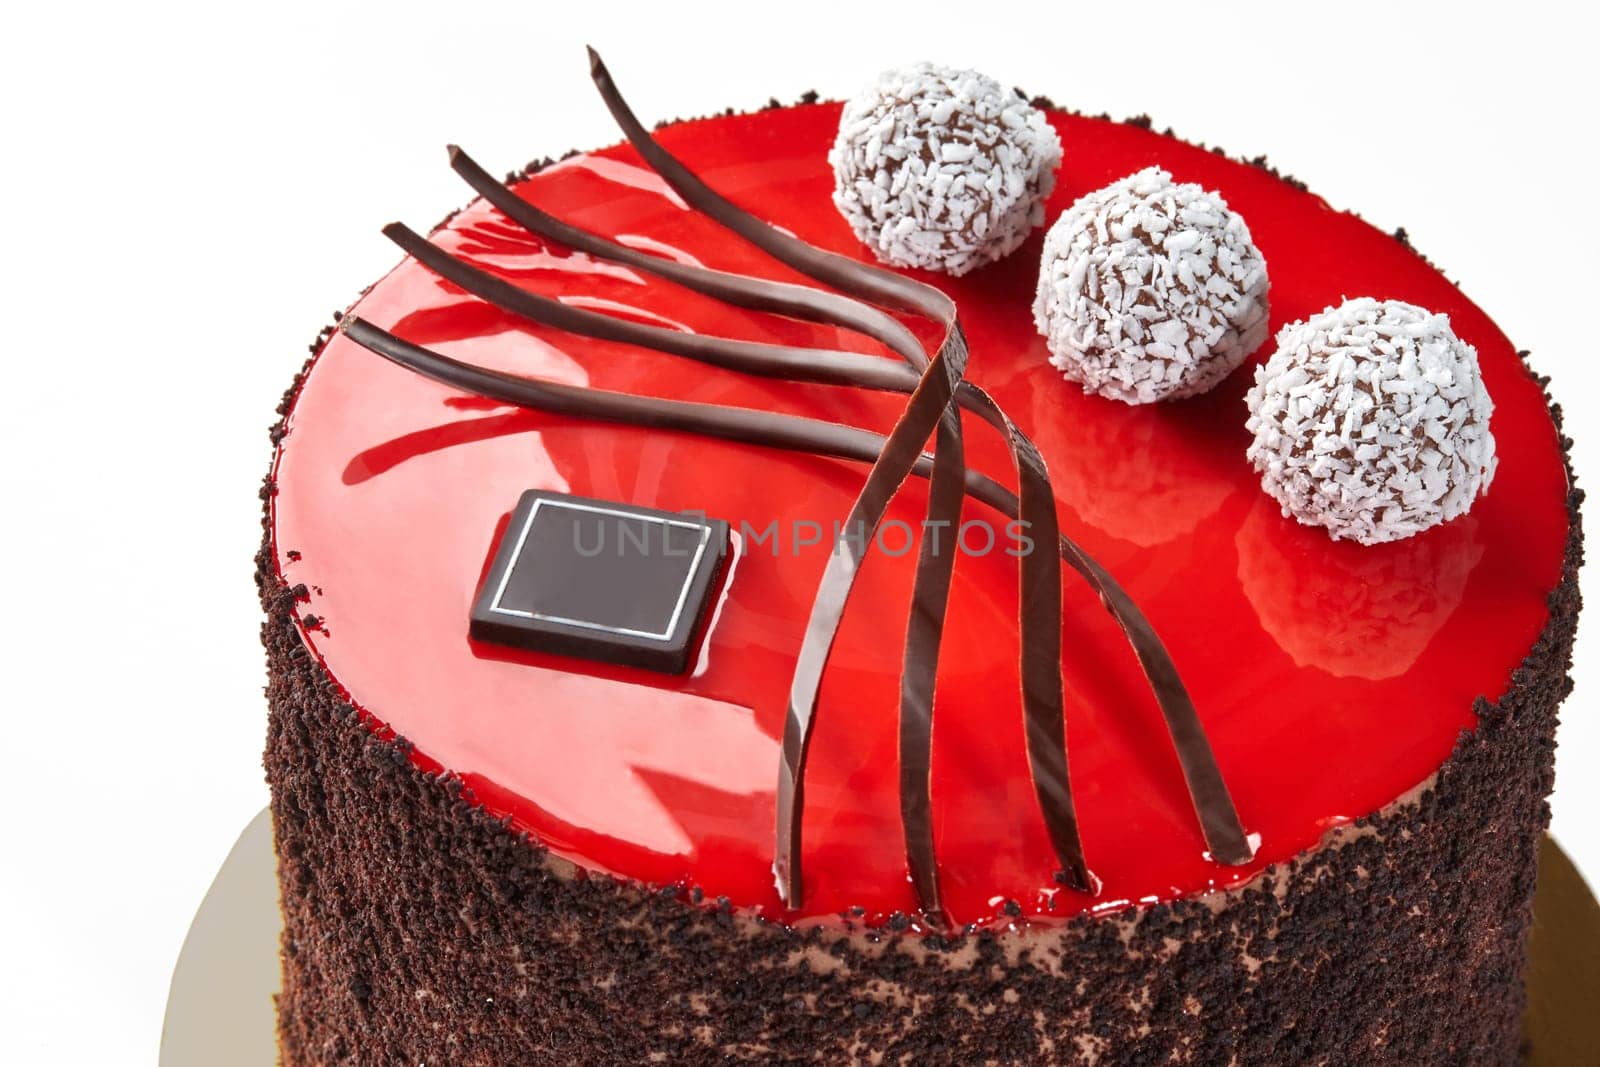 Chocolate decorated cake with red glaze and coconut truffles by nazarovsergey